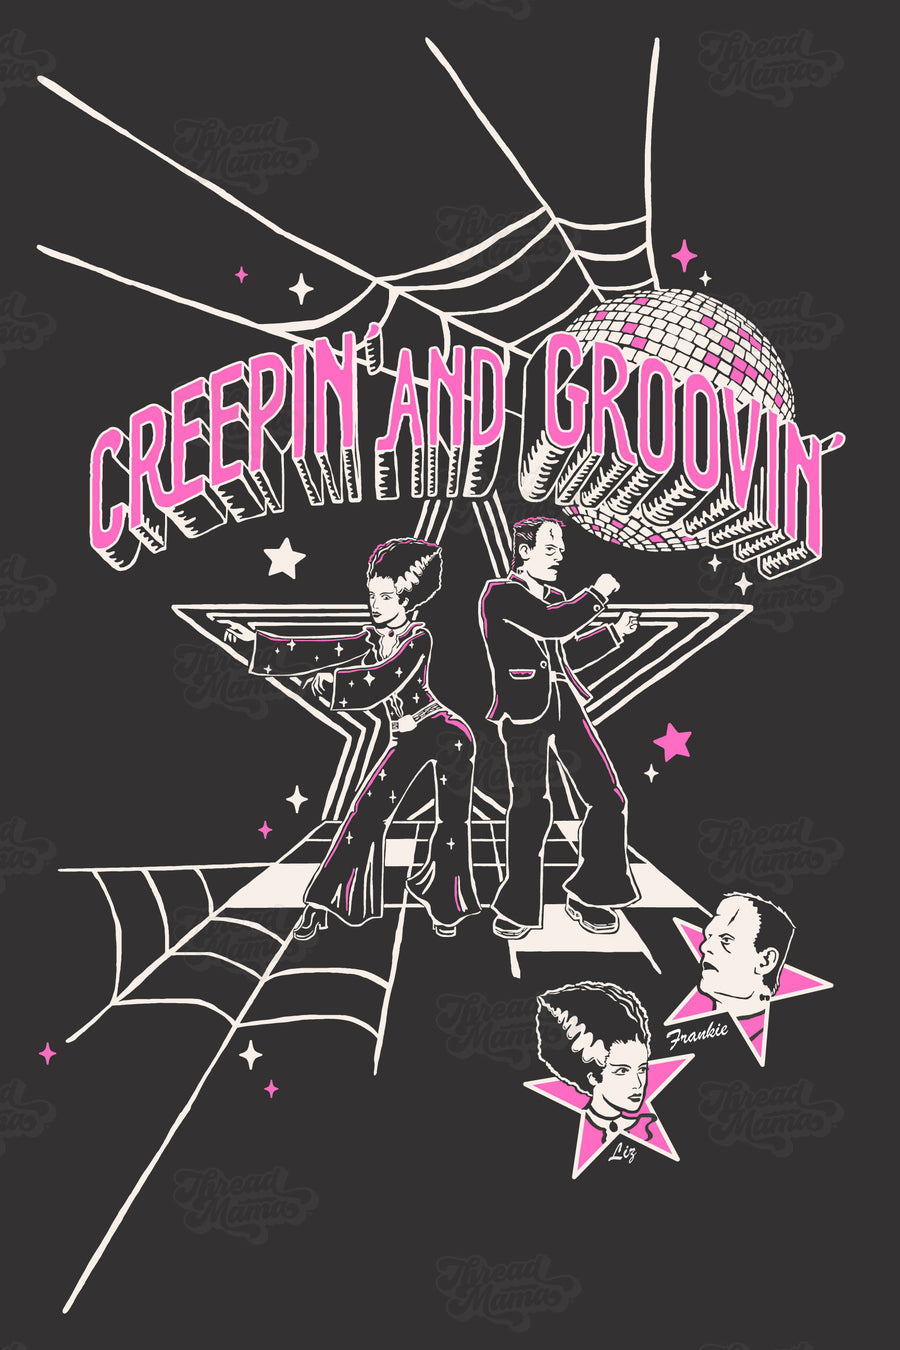 Creepin' and Groovin' - Set